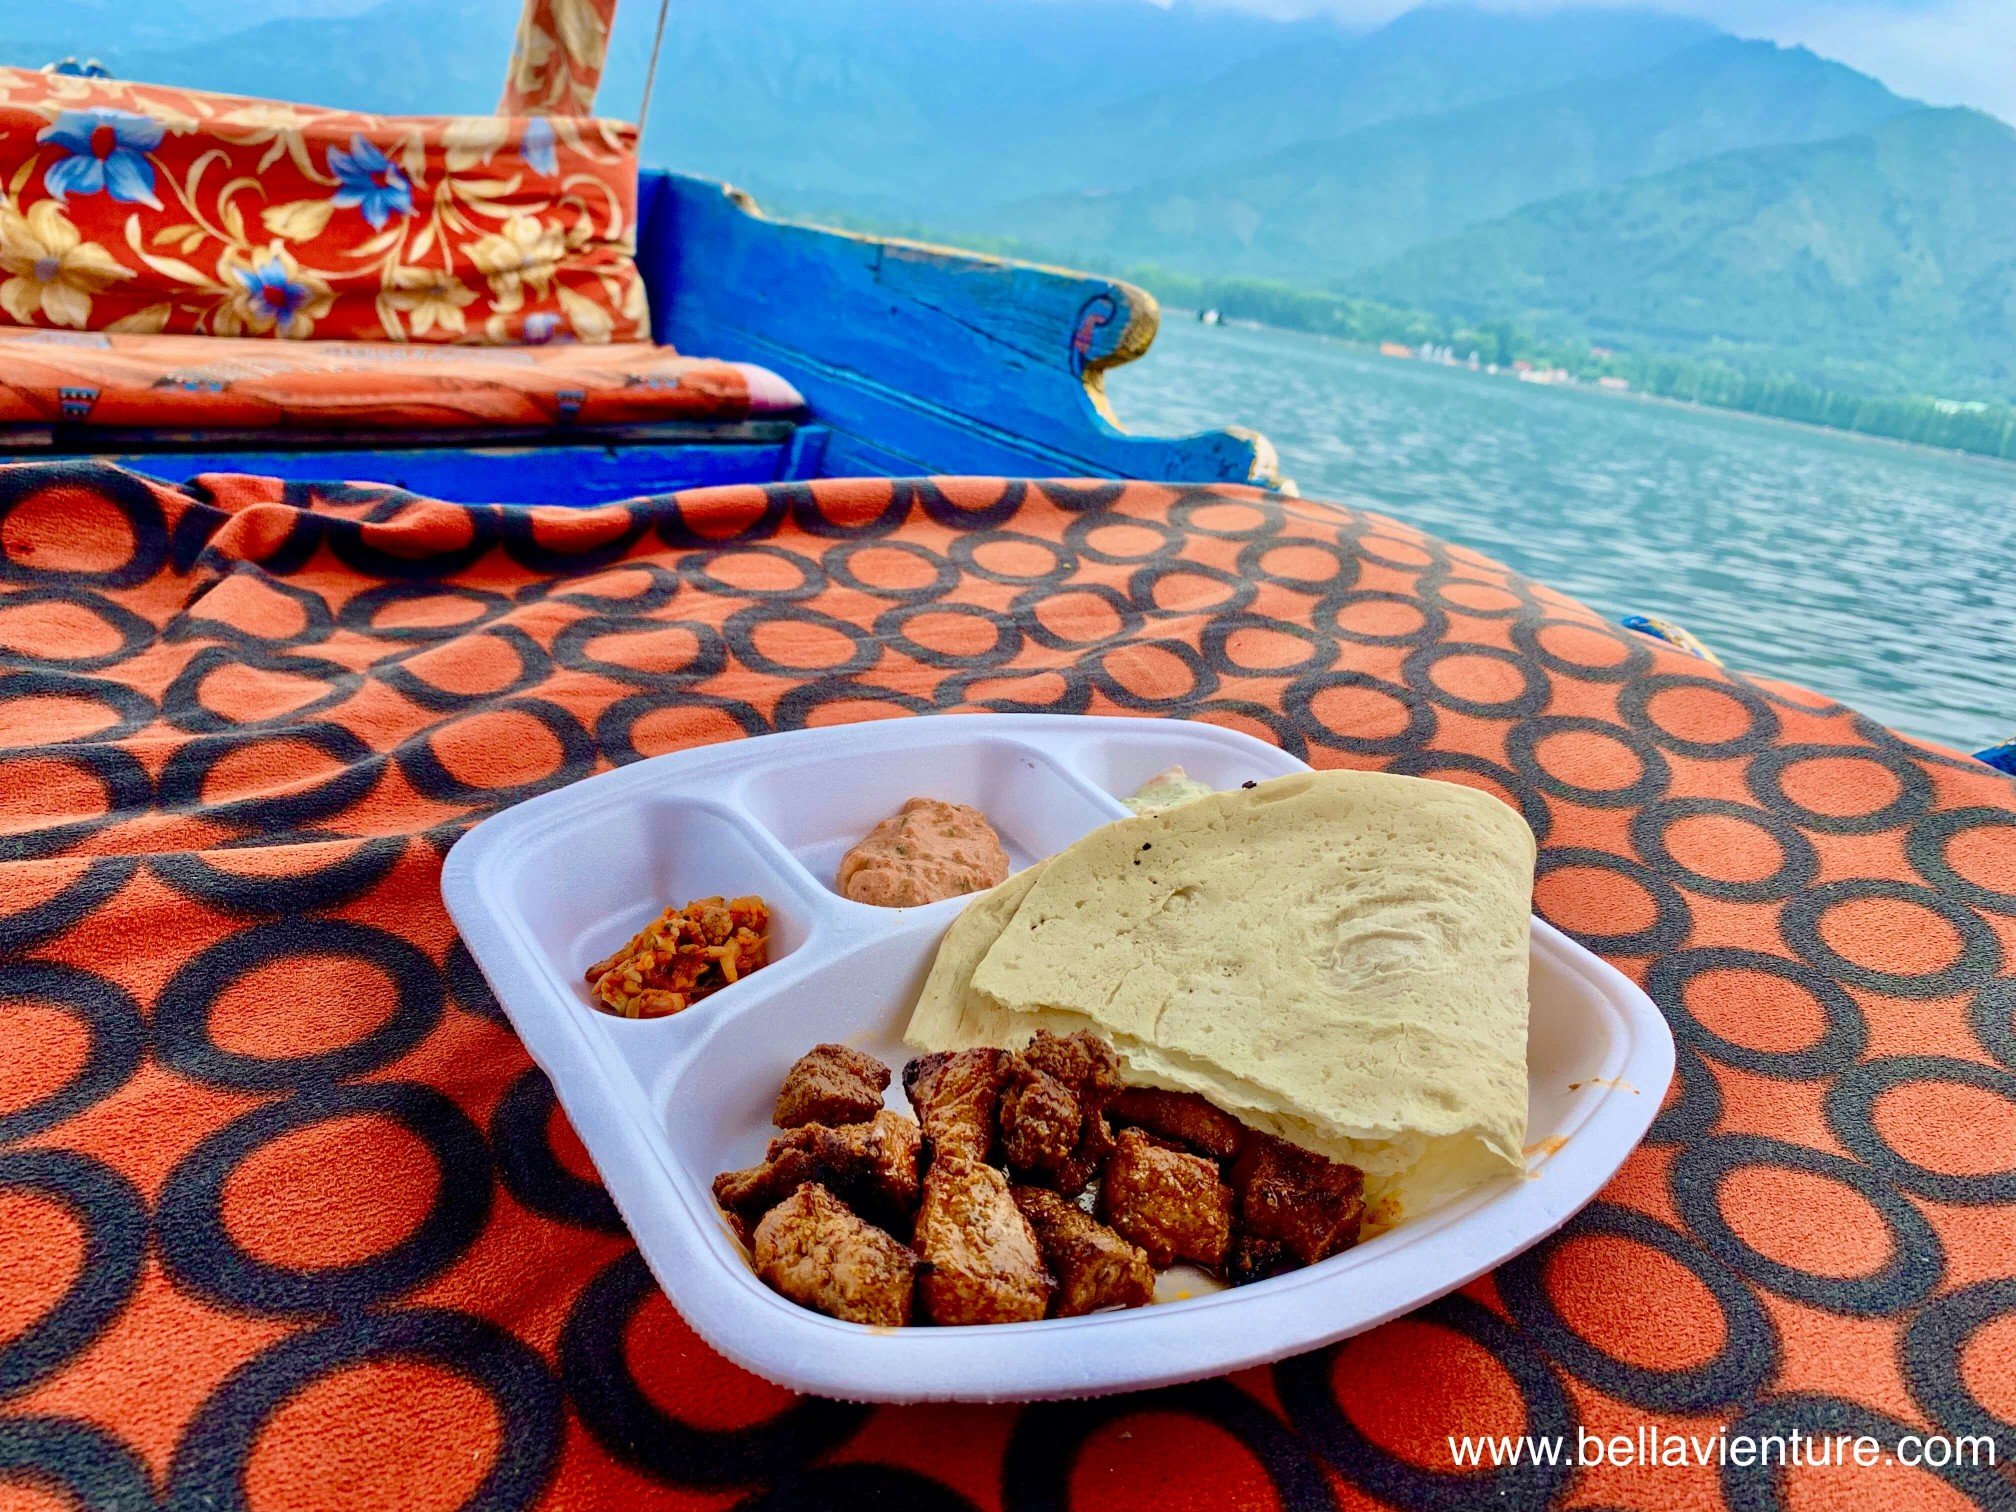 印度 India 北北印 north India 喀什米爾 Kashmir 花園 garden 斯里納加 Srinagar Dal lake 烤肉